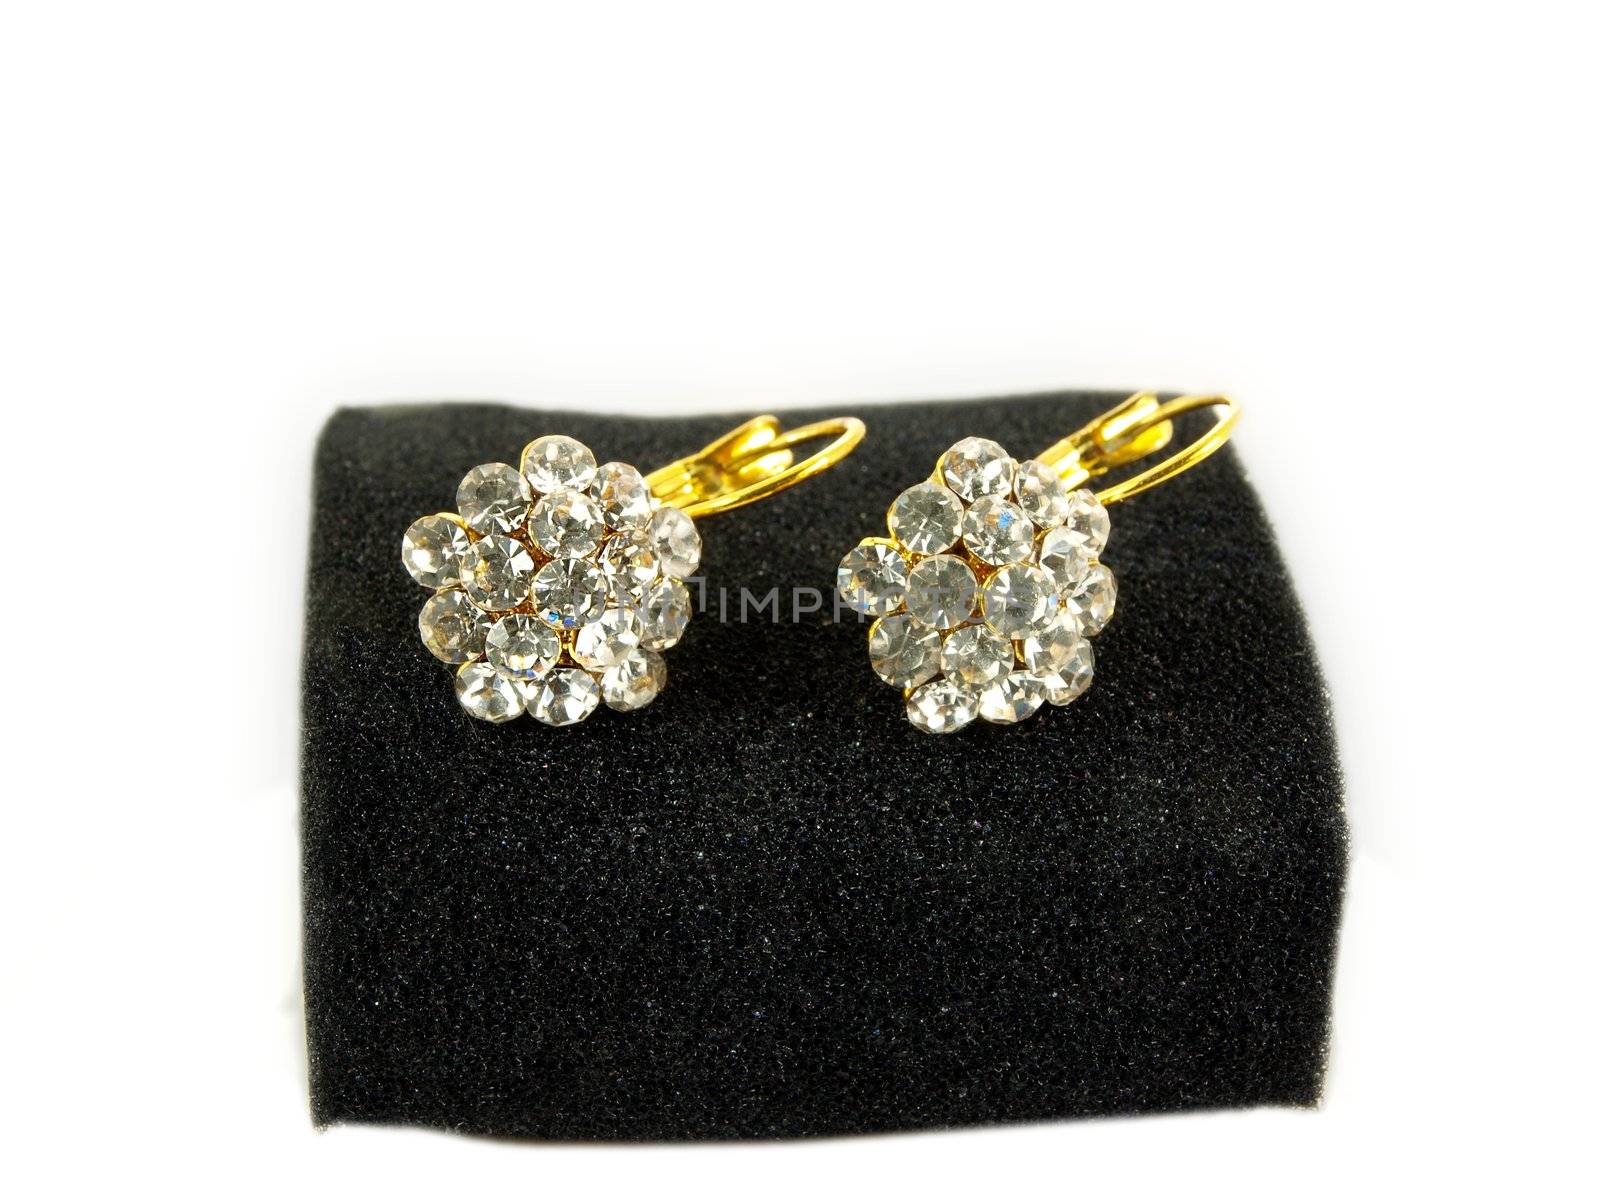 Diamond earrings by Arvebettum